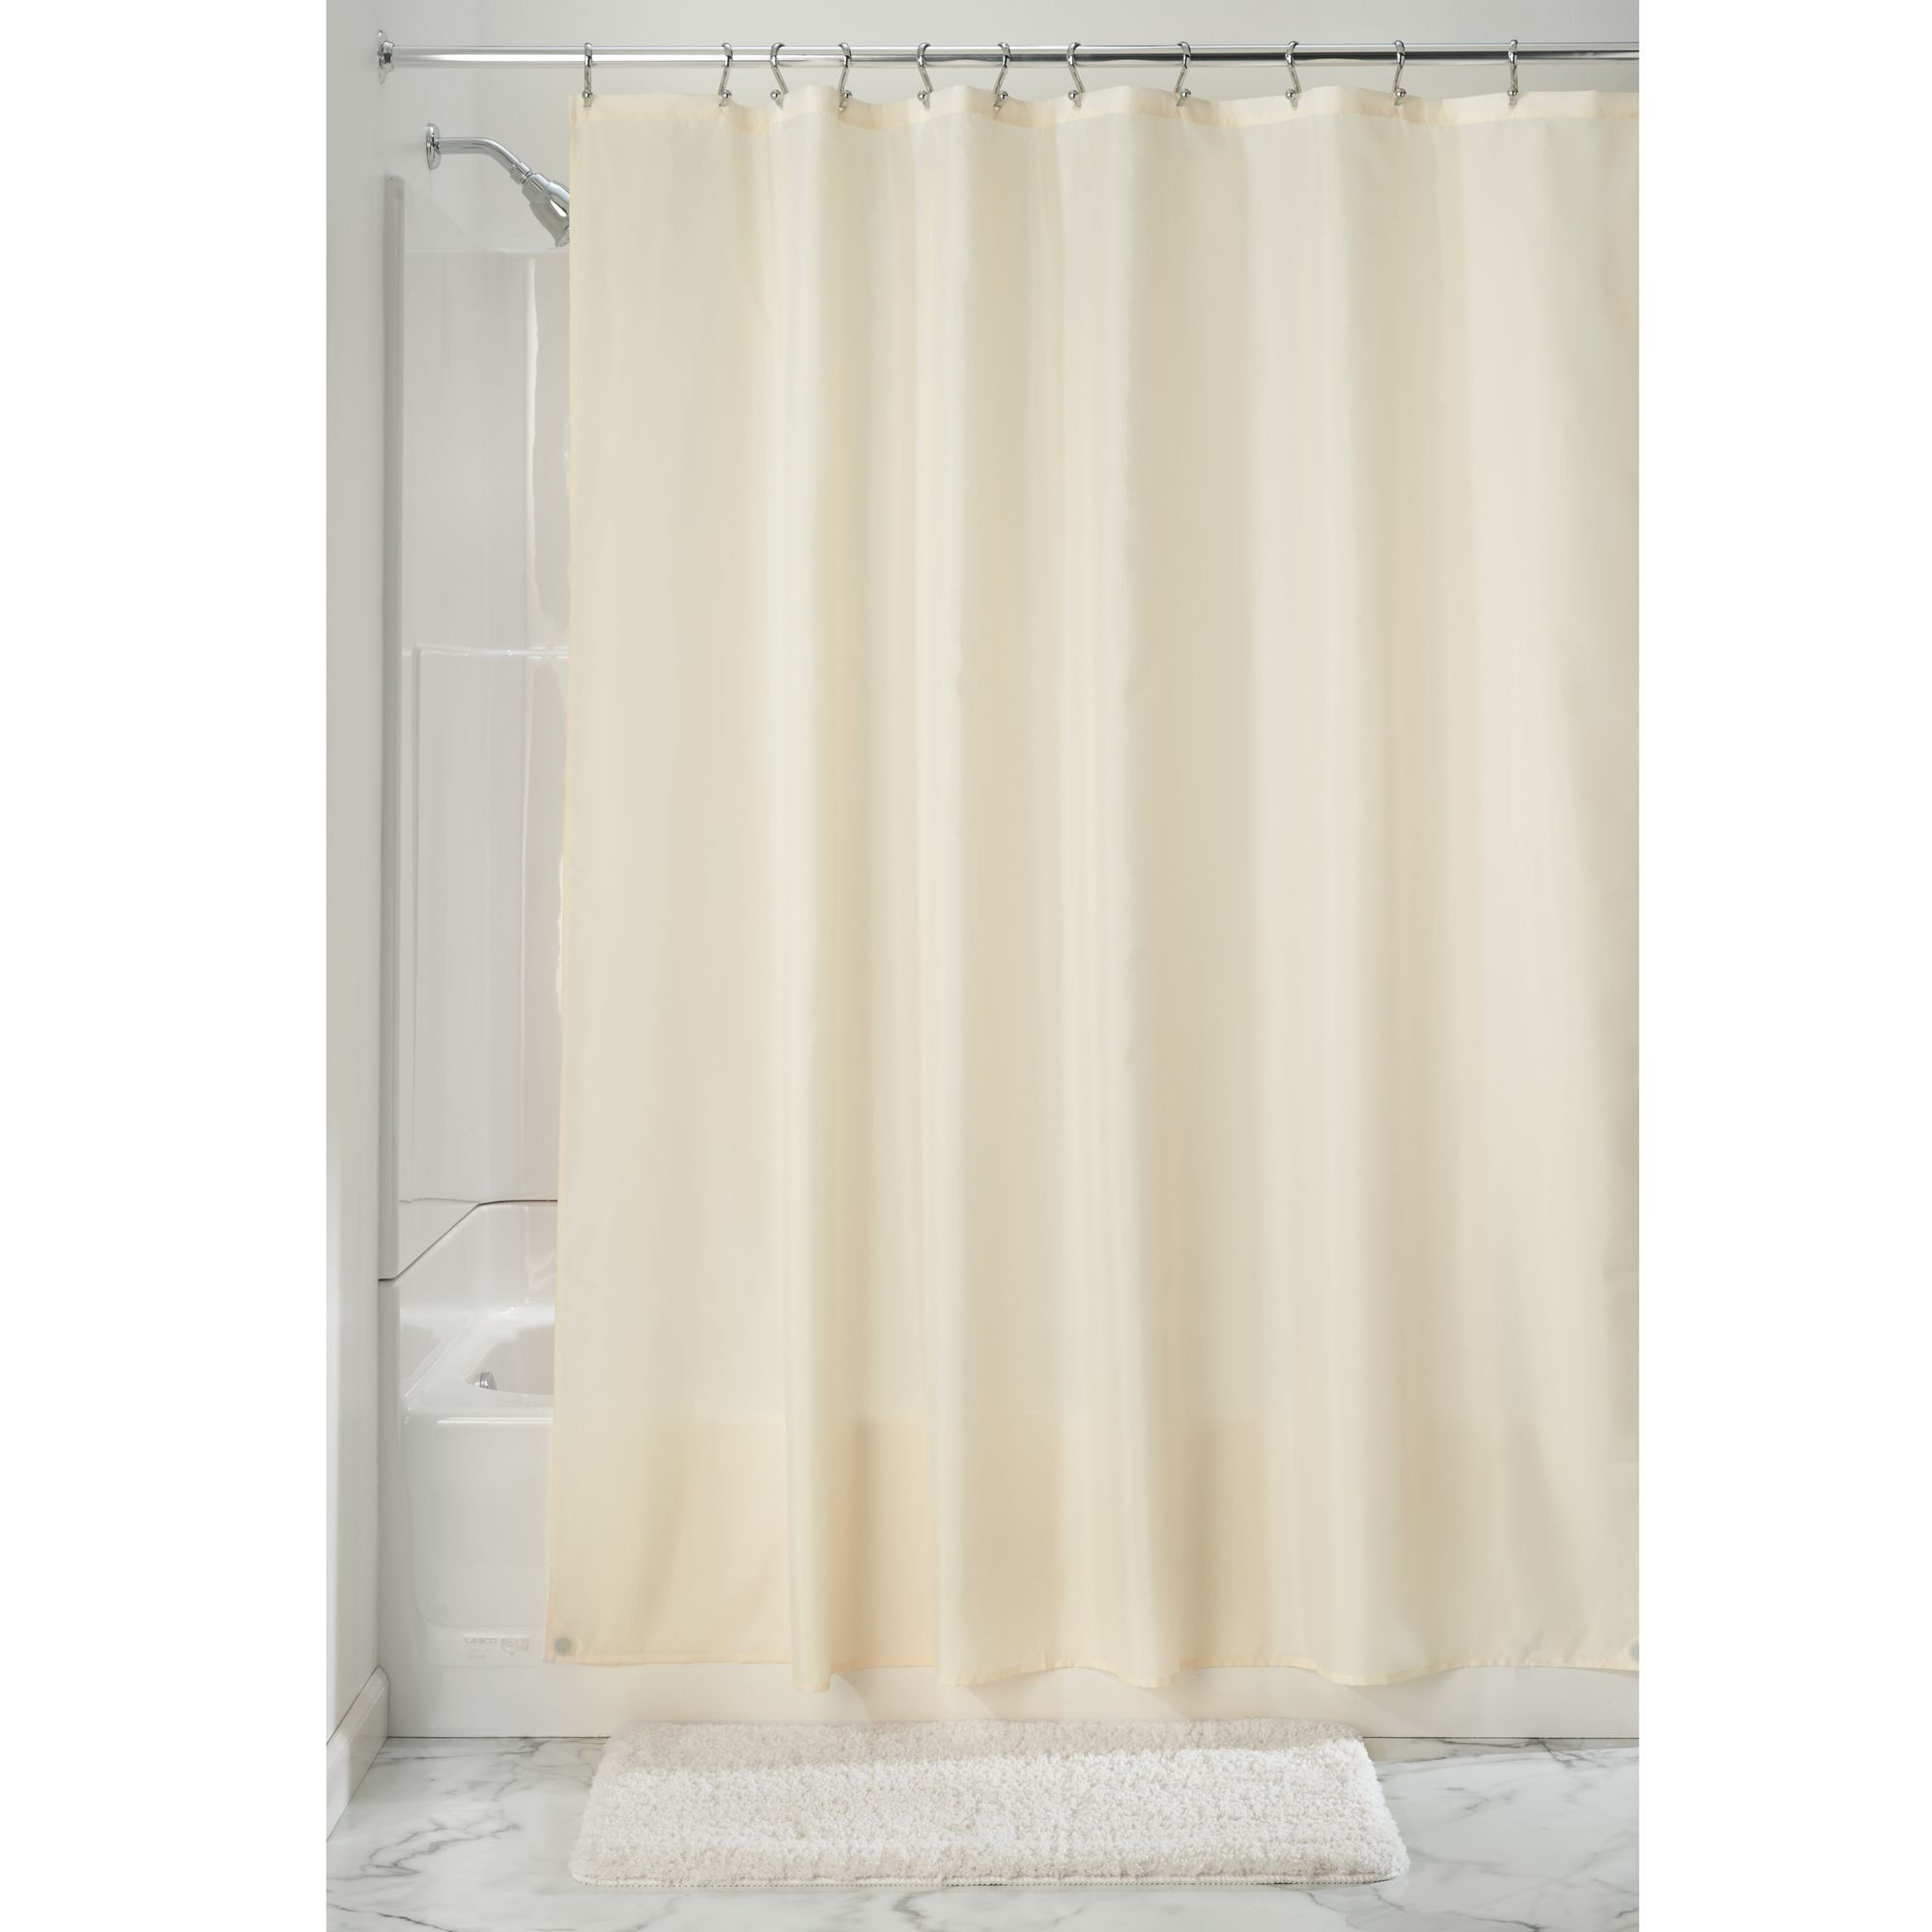 Route US 66 Road Design Bathroom Waterproof Fabric Shower Curtain Liner 72/79" 